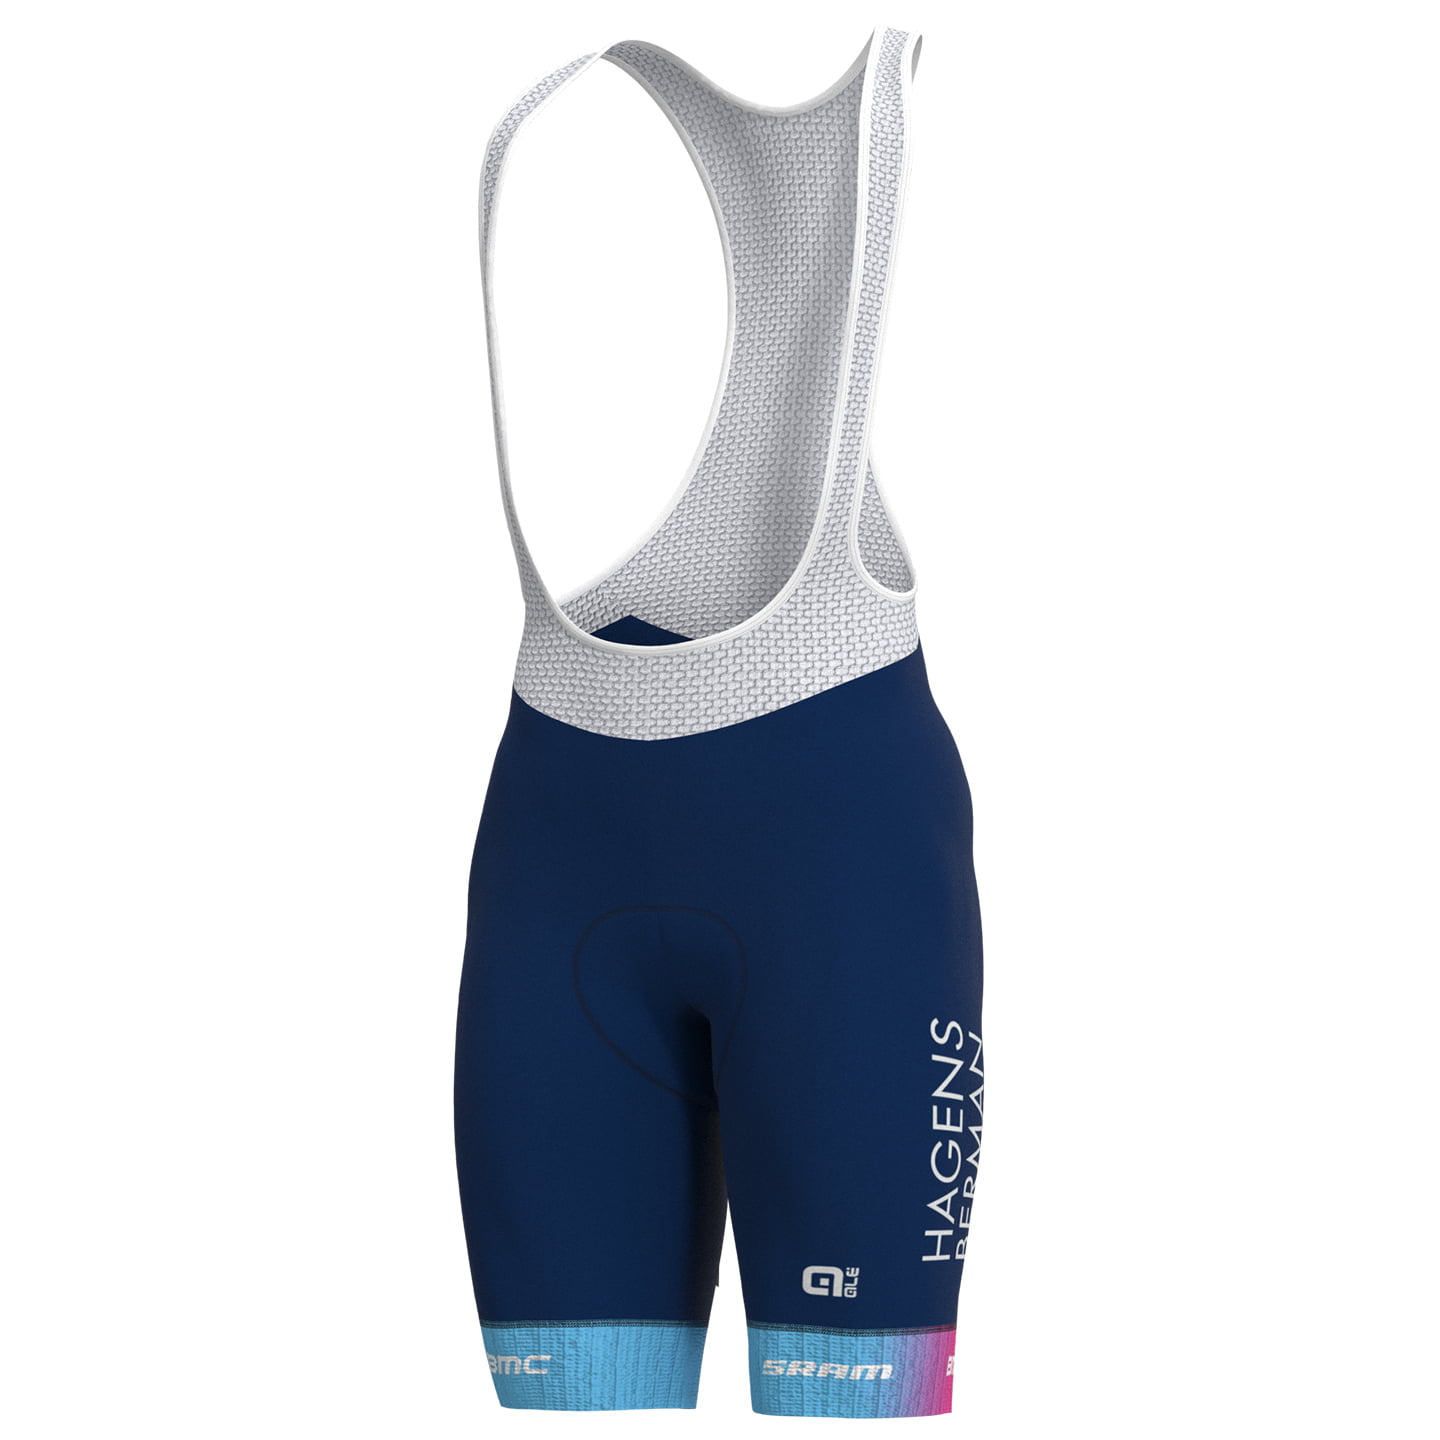 HAGENS BERMAN AXEON 2022 Bib Shorts, for men, size S, Cycle shorts, Cycling clothing